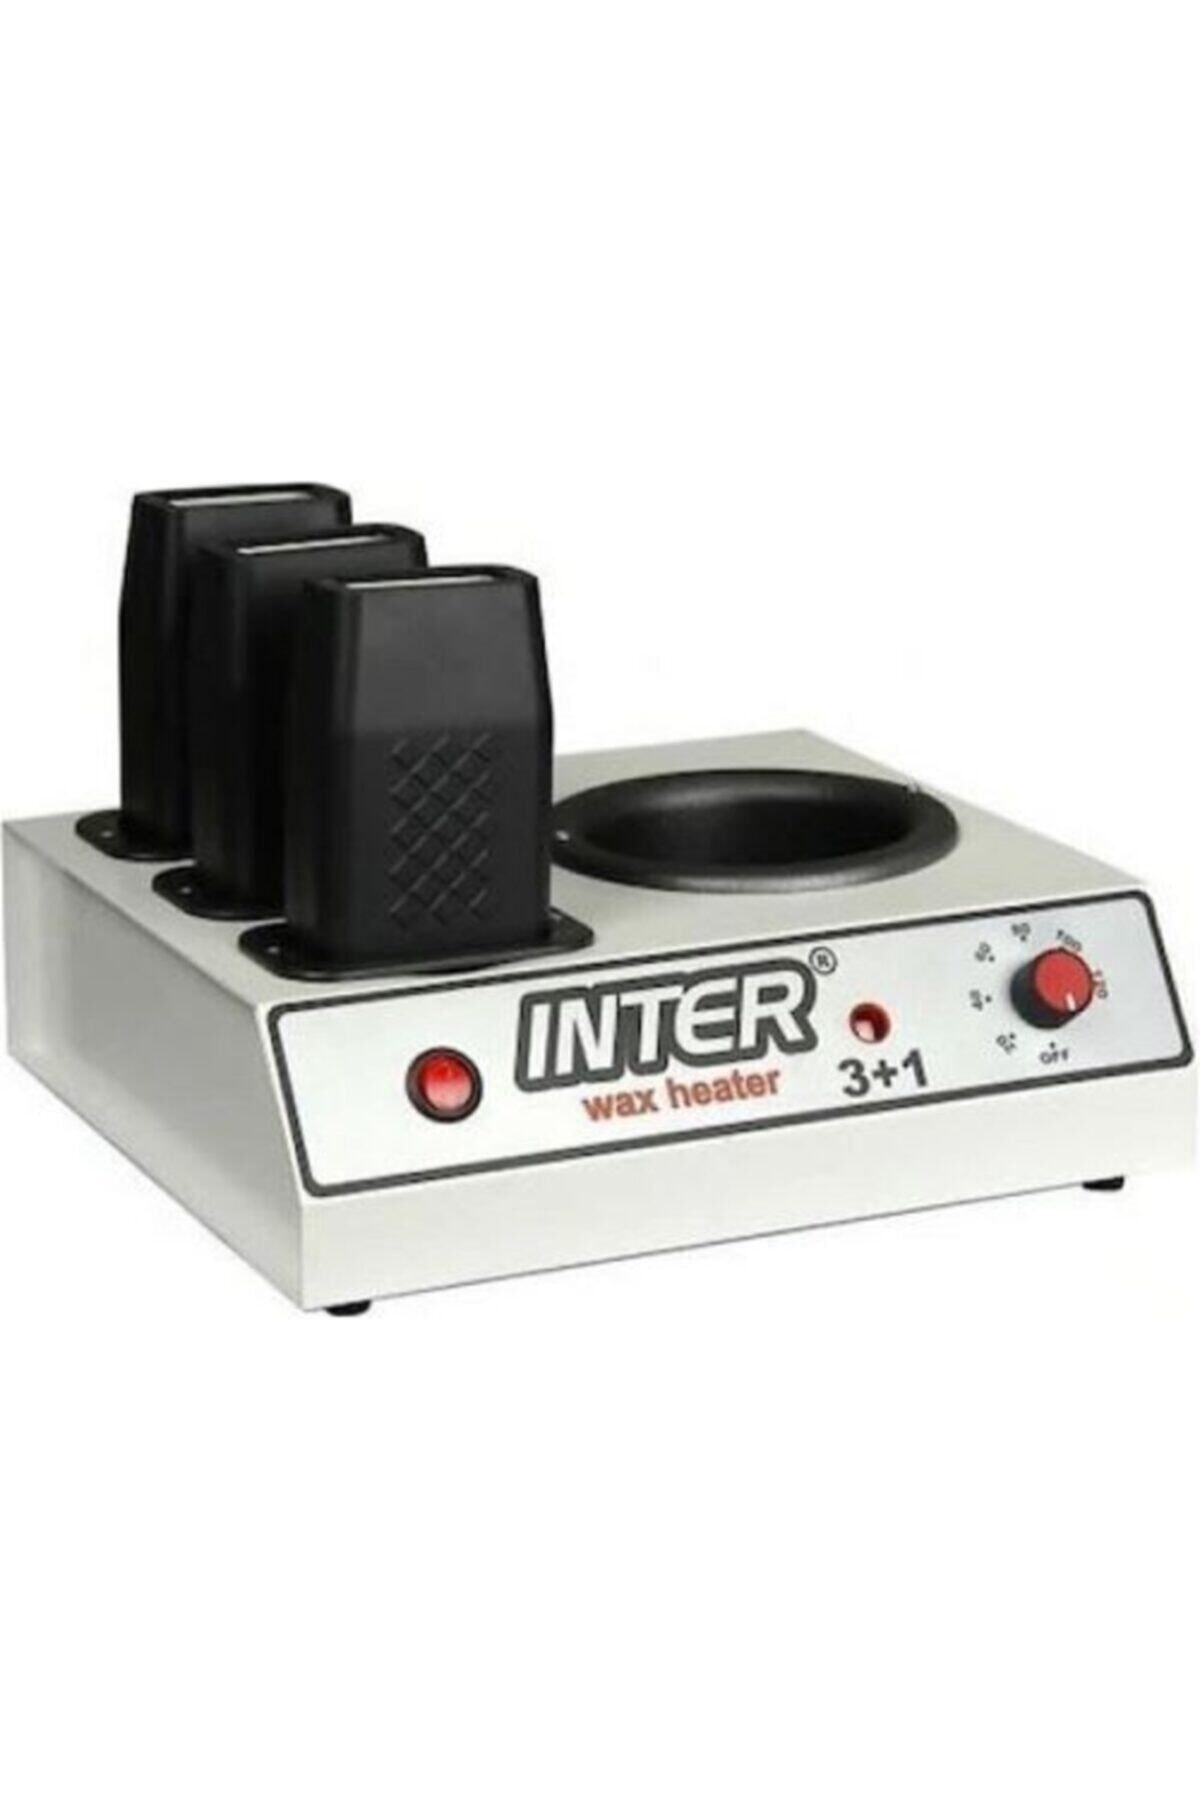 EGE STORE Inter Wax Heater 3 + 1 Kombine Ağda Makinesi